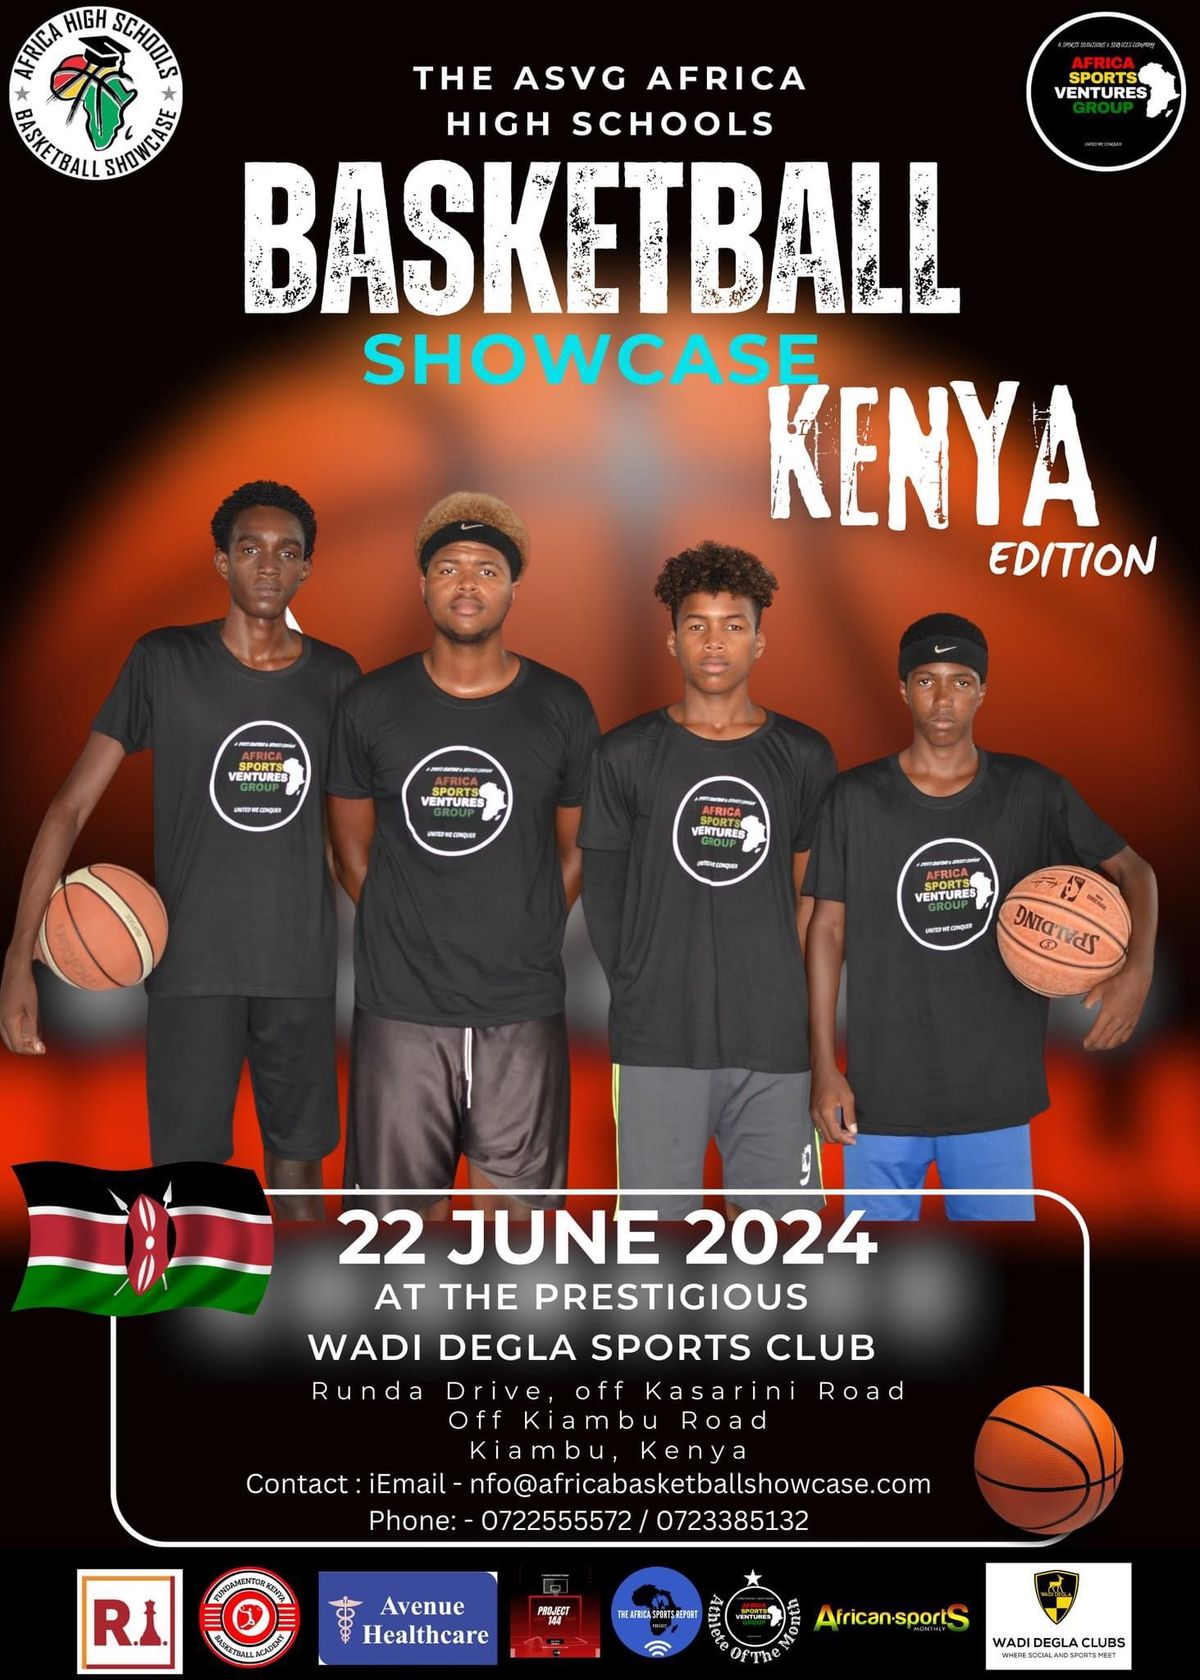 ASVG Africa High Schools Basketball Showcase Kenya Edition